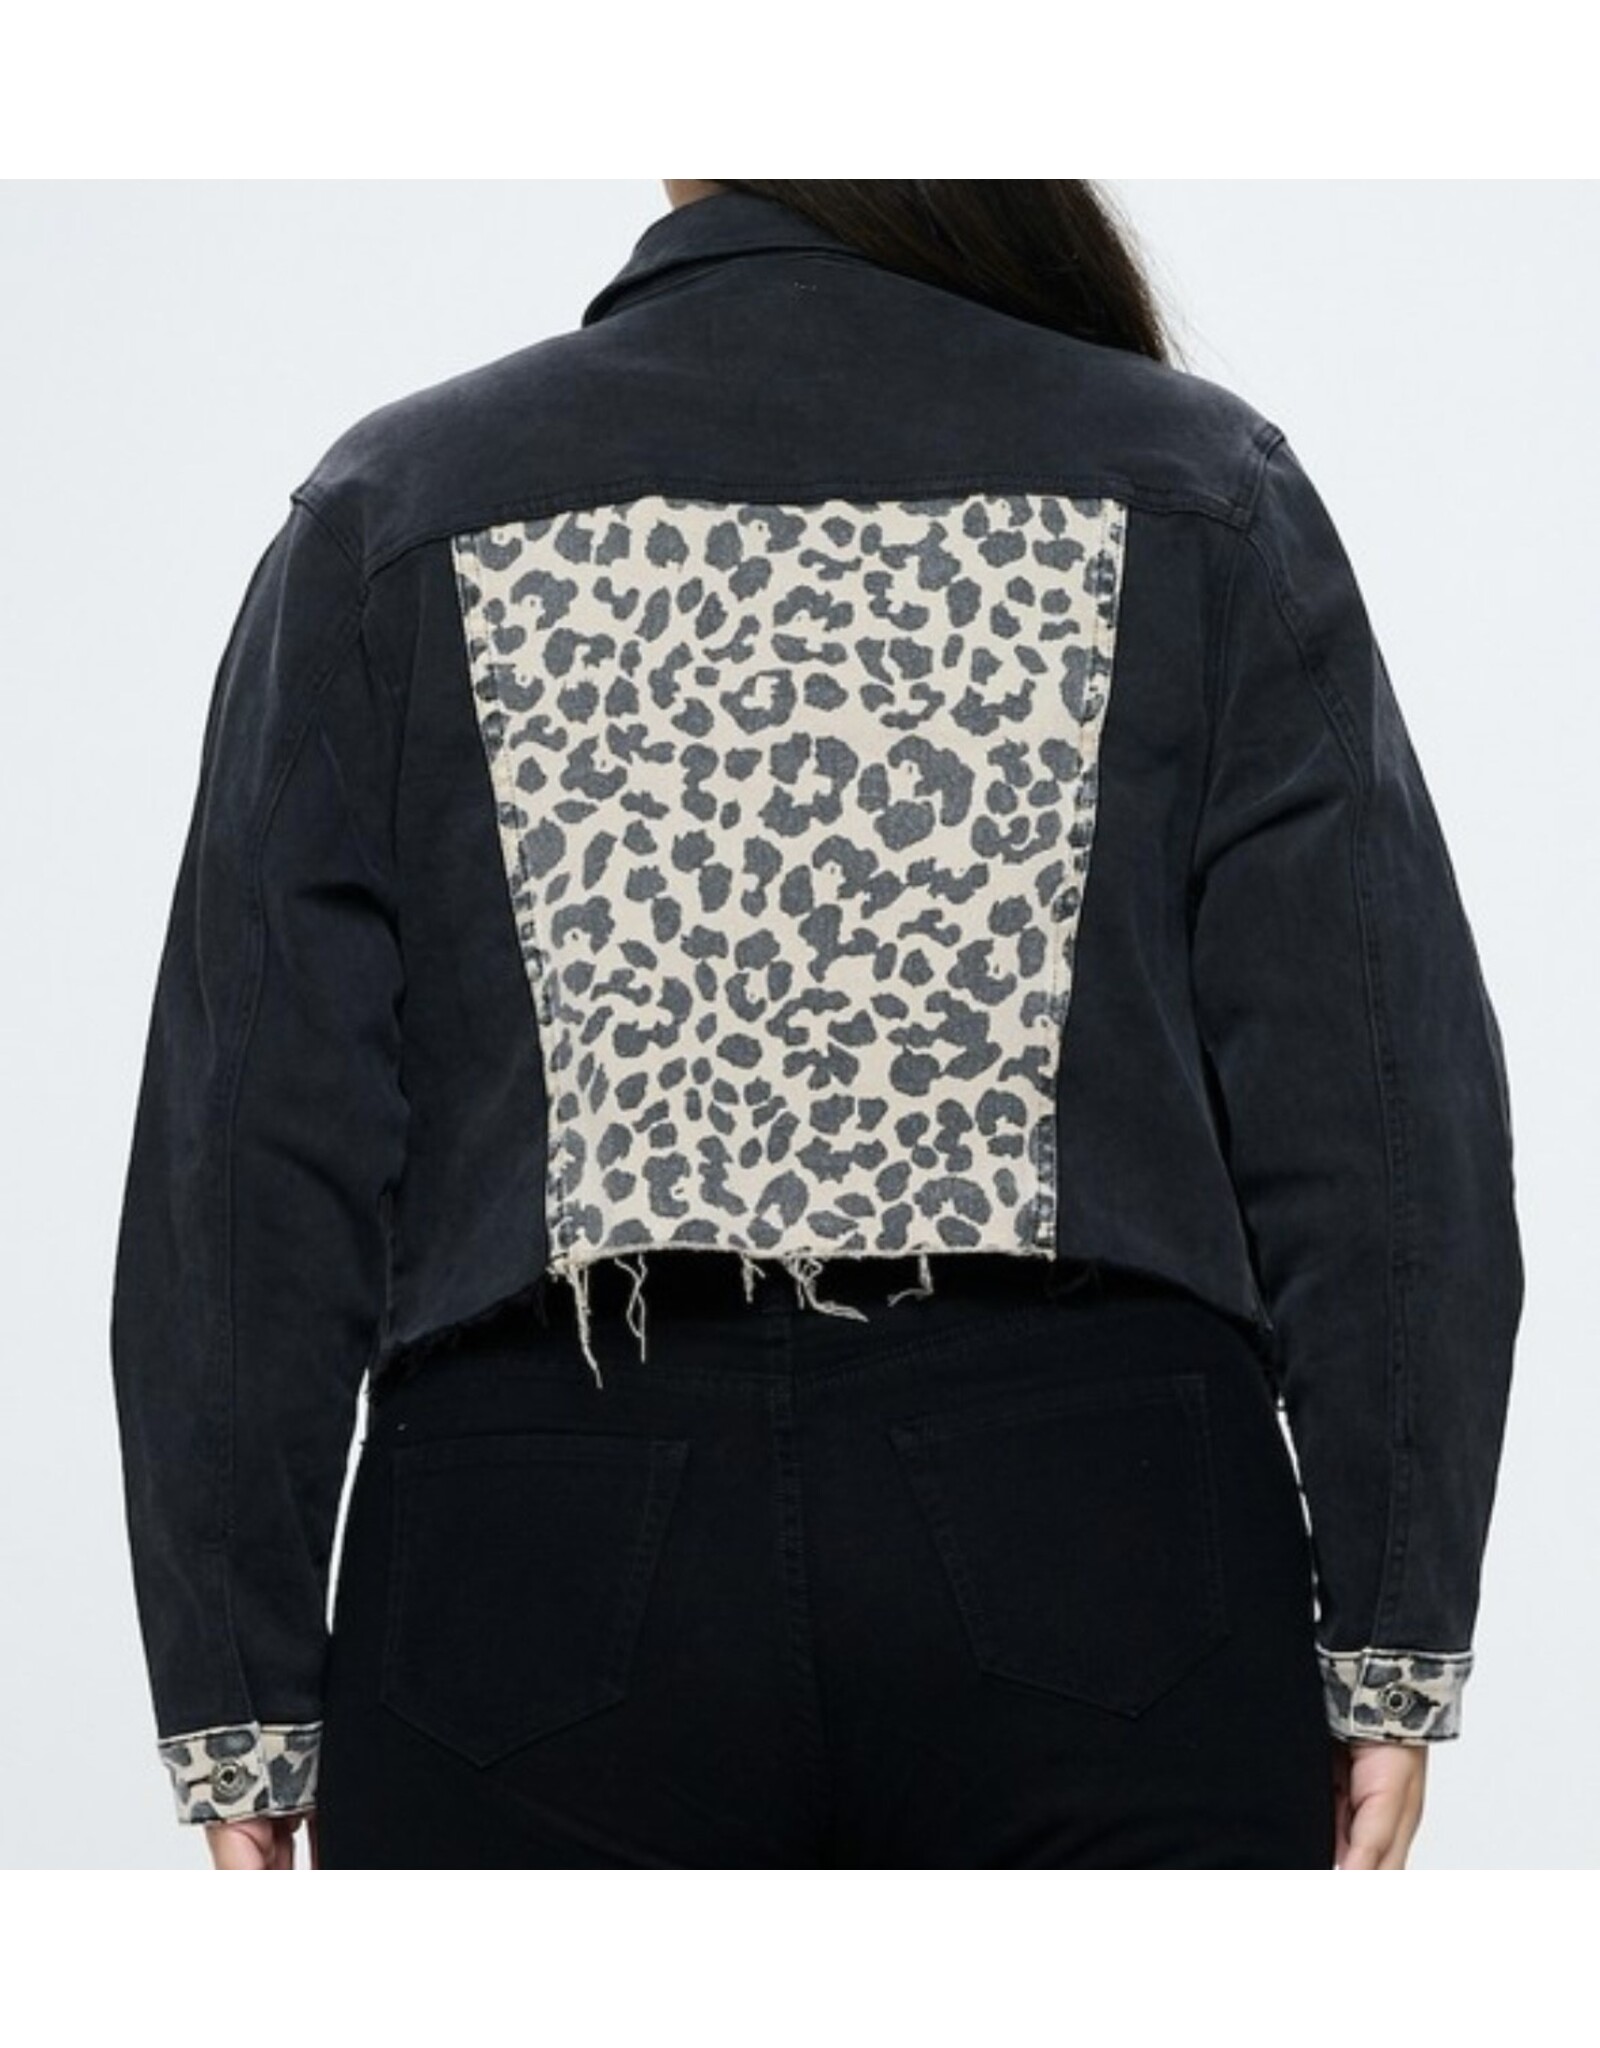 LATA Leopard contrast black denim jacket